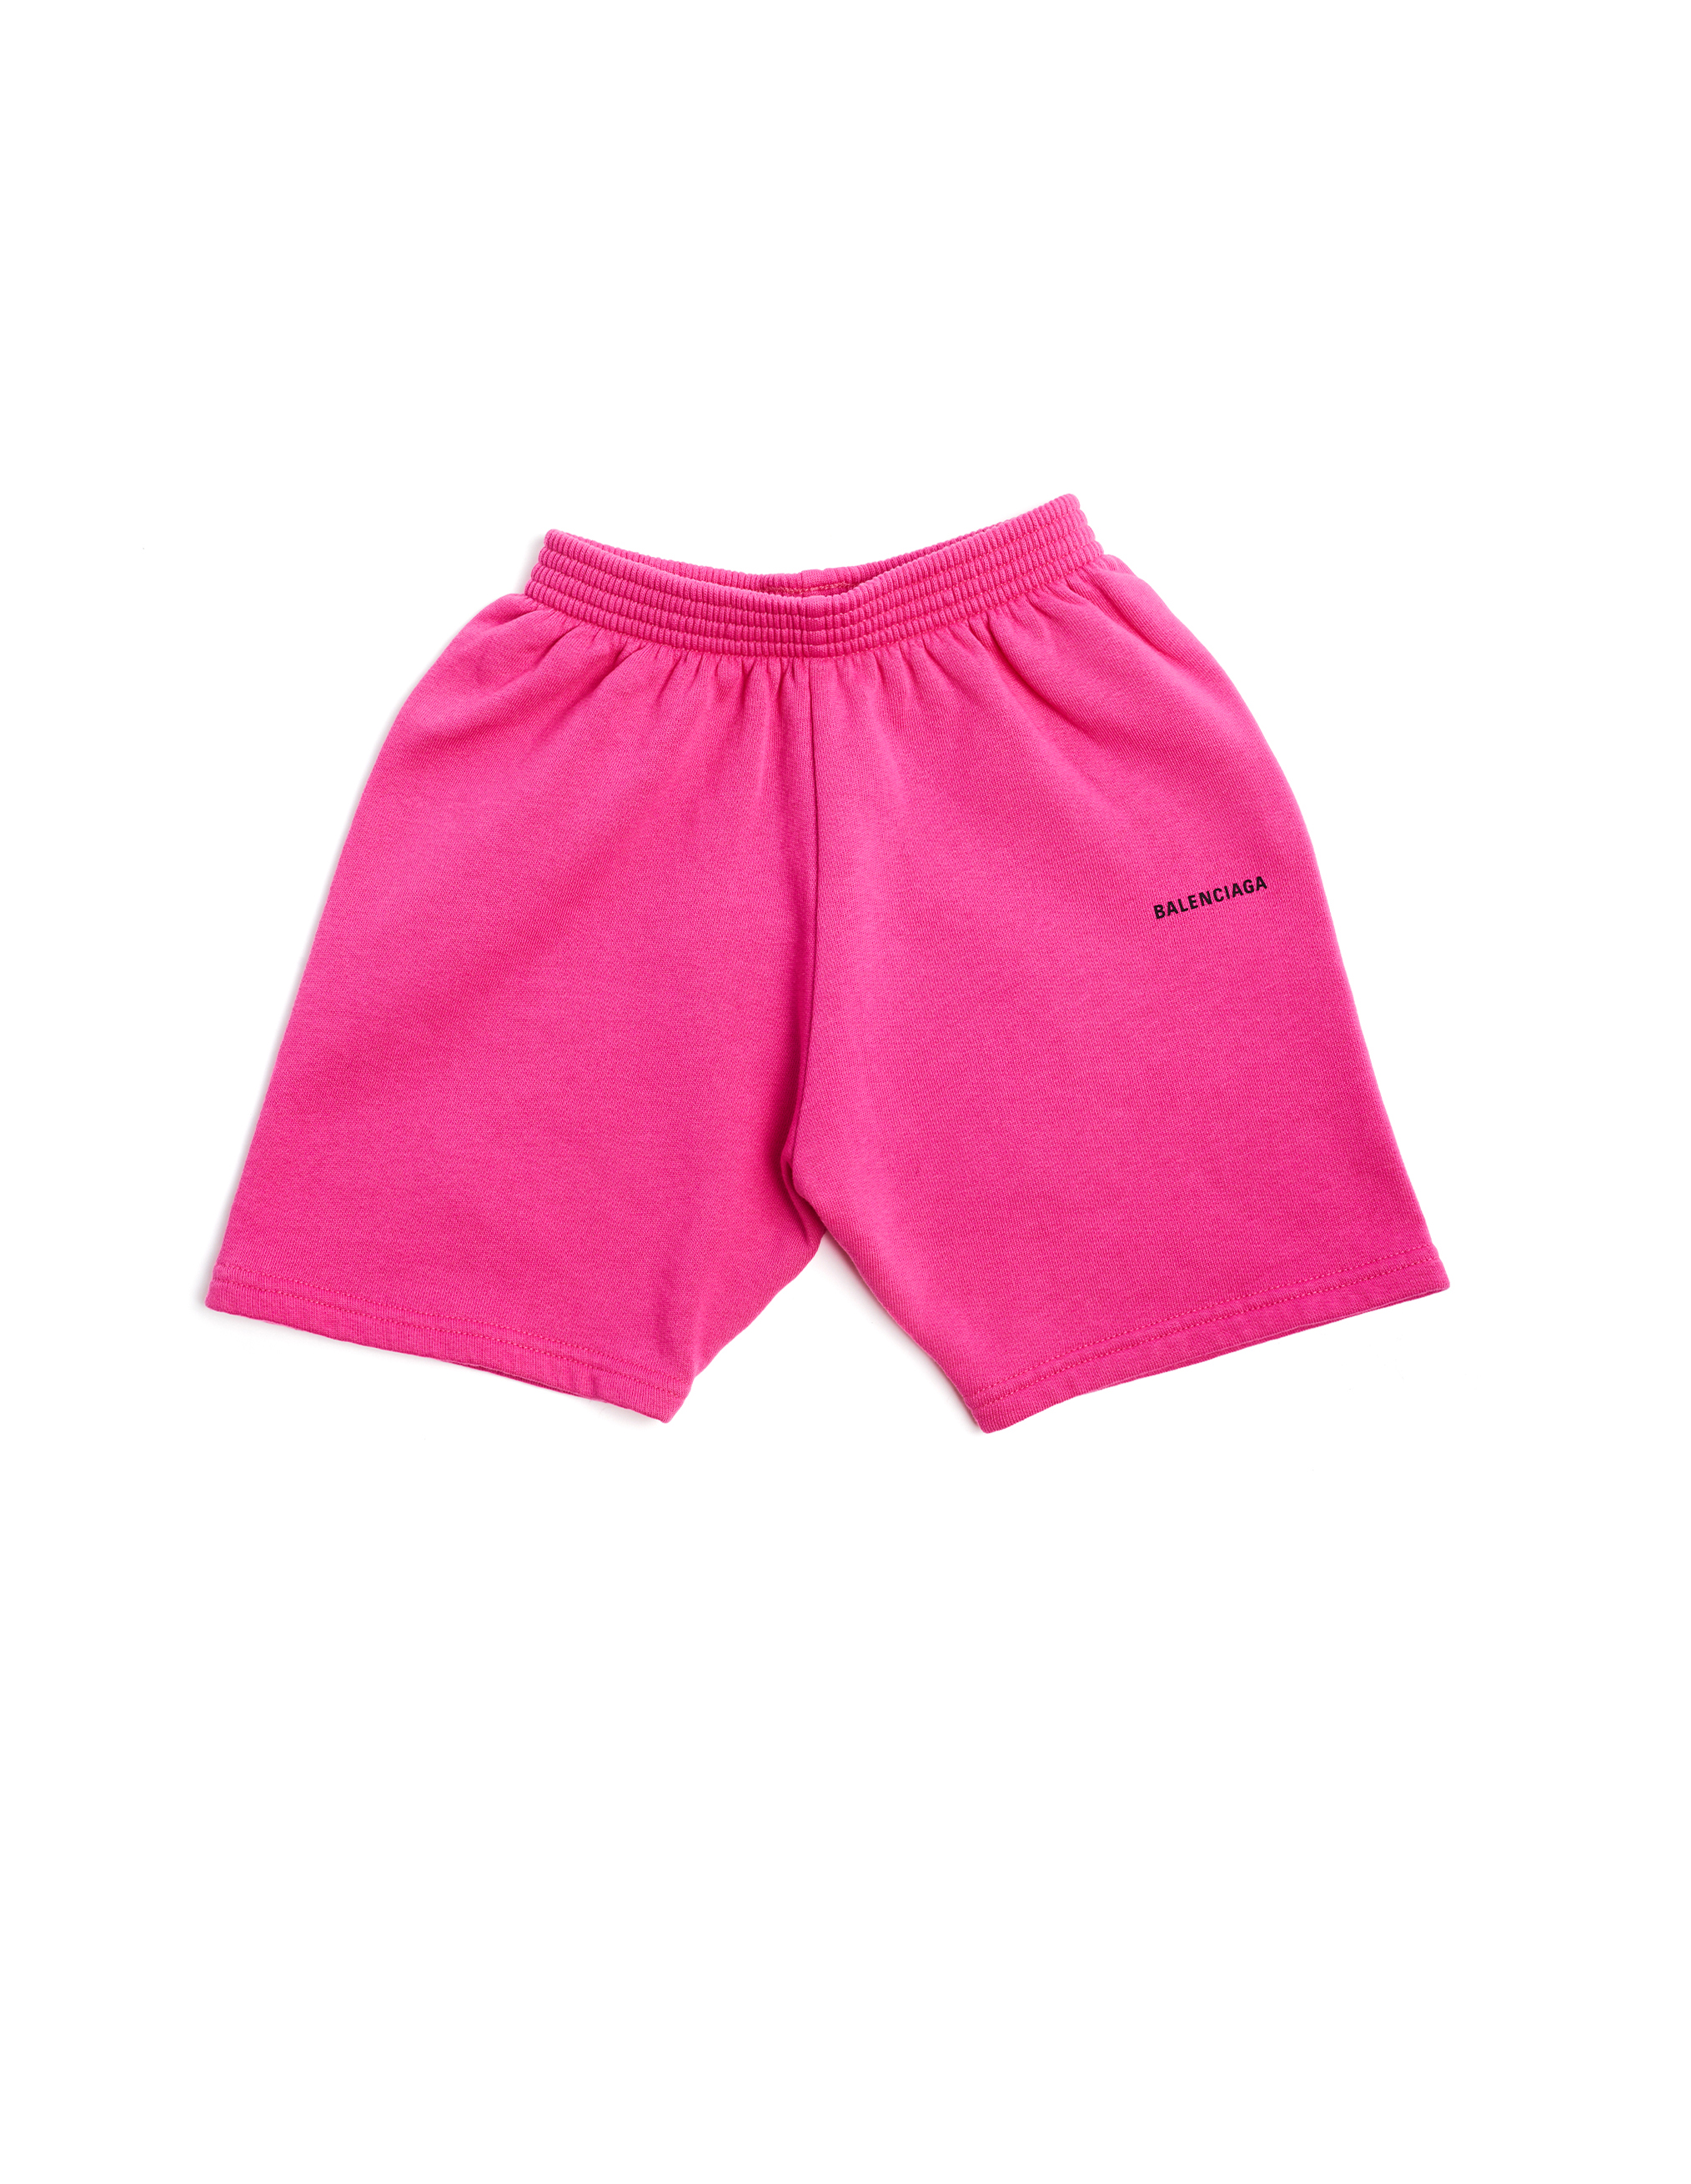 Balenciaga Kids | Pink Cotton Shorts 